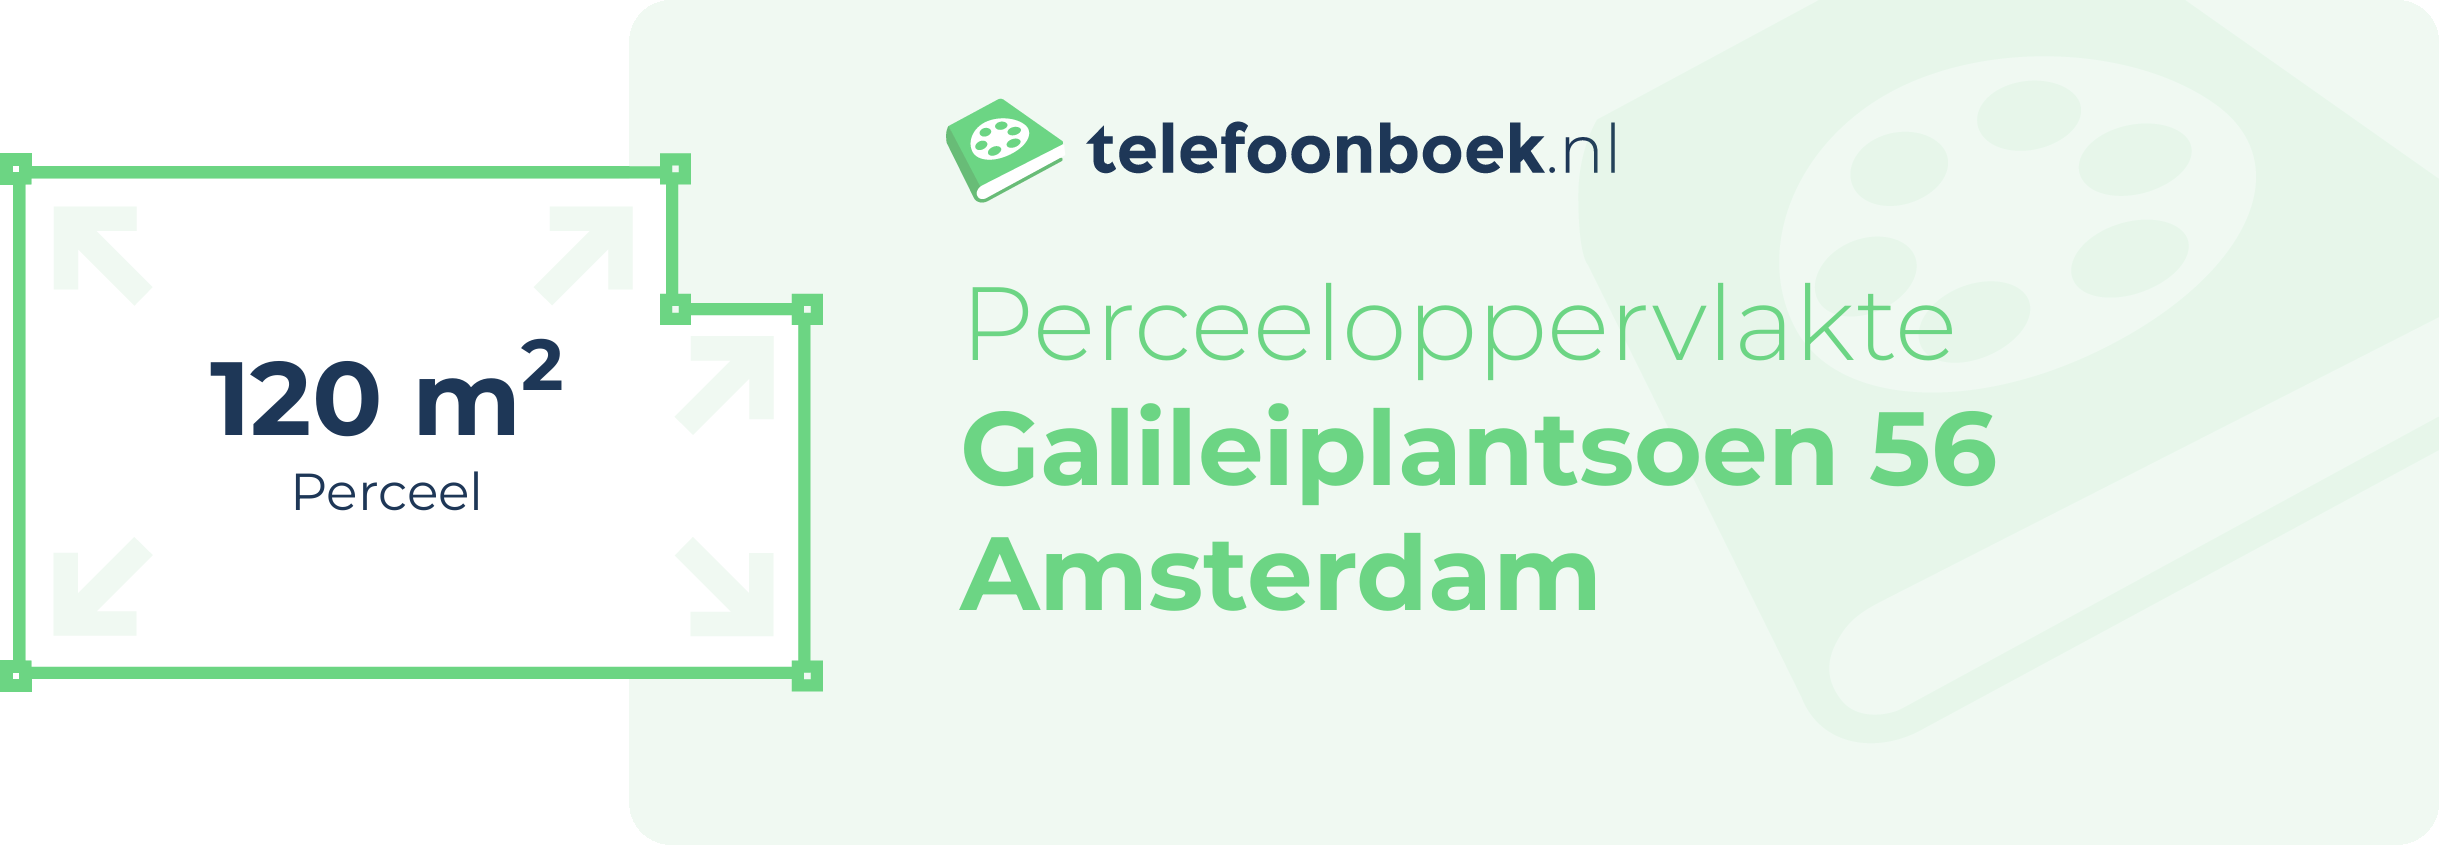 Perceeloppervlakte Galileiplantsoen 56 Amsterdam